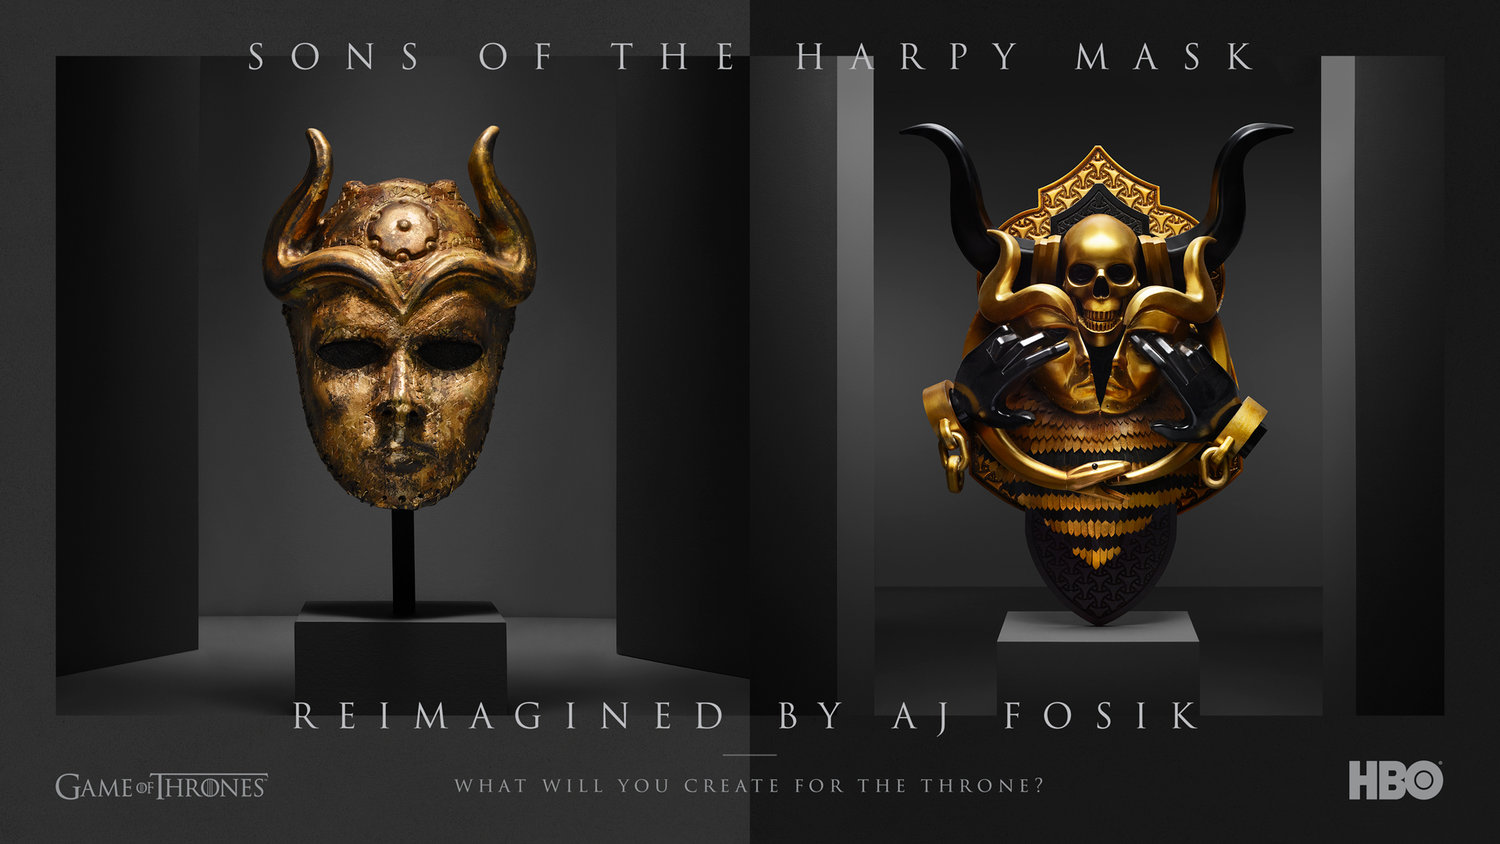 02_FASHION_Sons_of_the_Harpy_Mask_AJ_Fosik